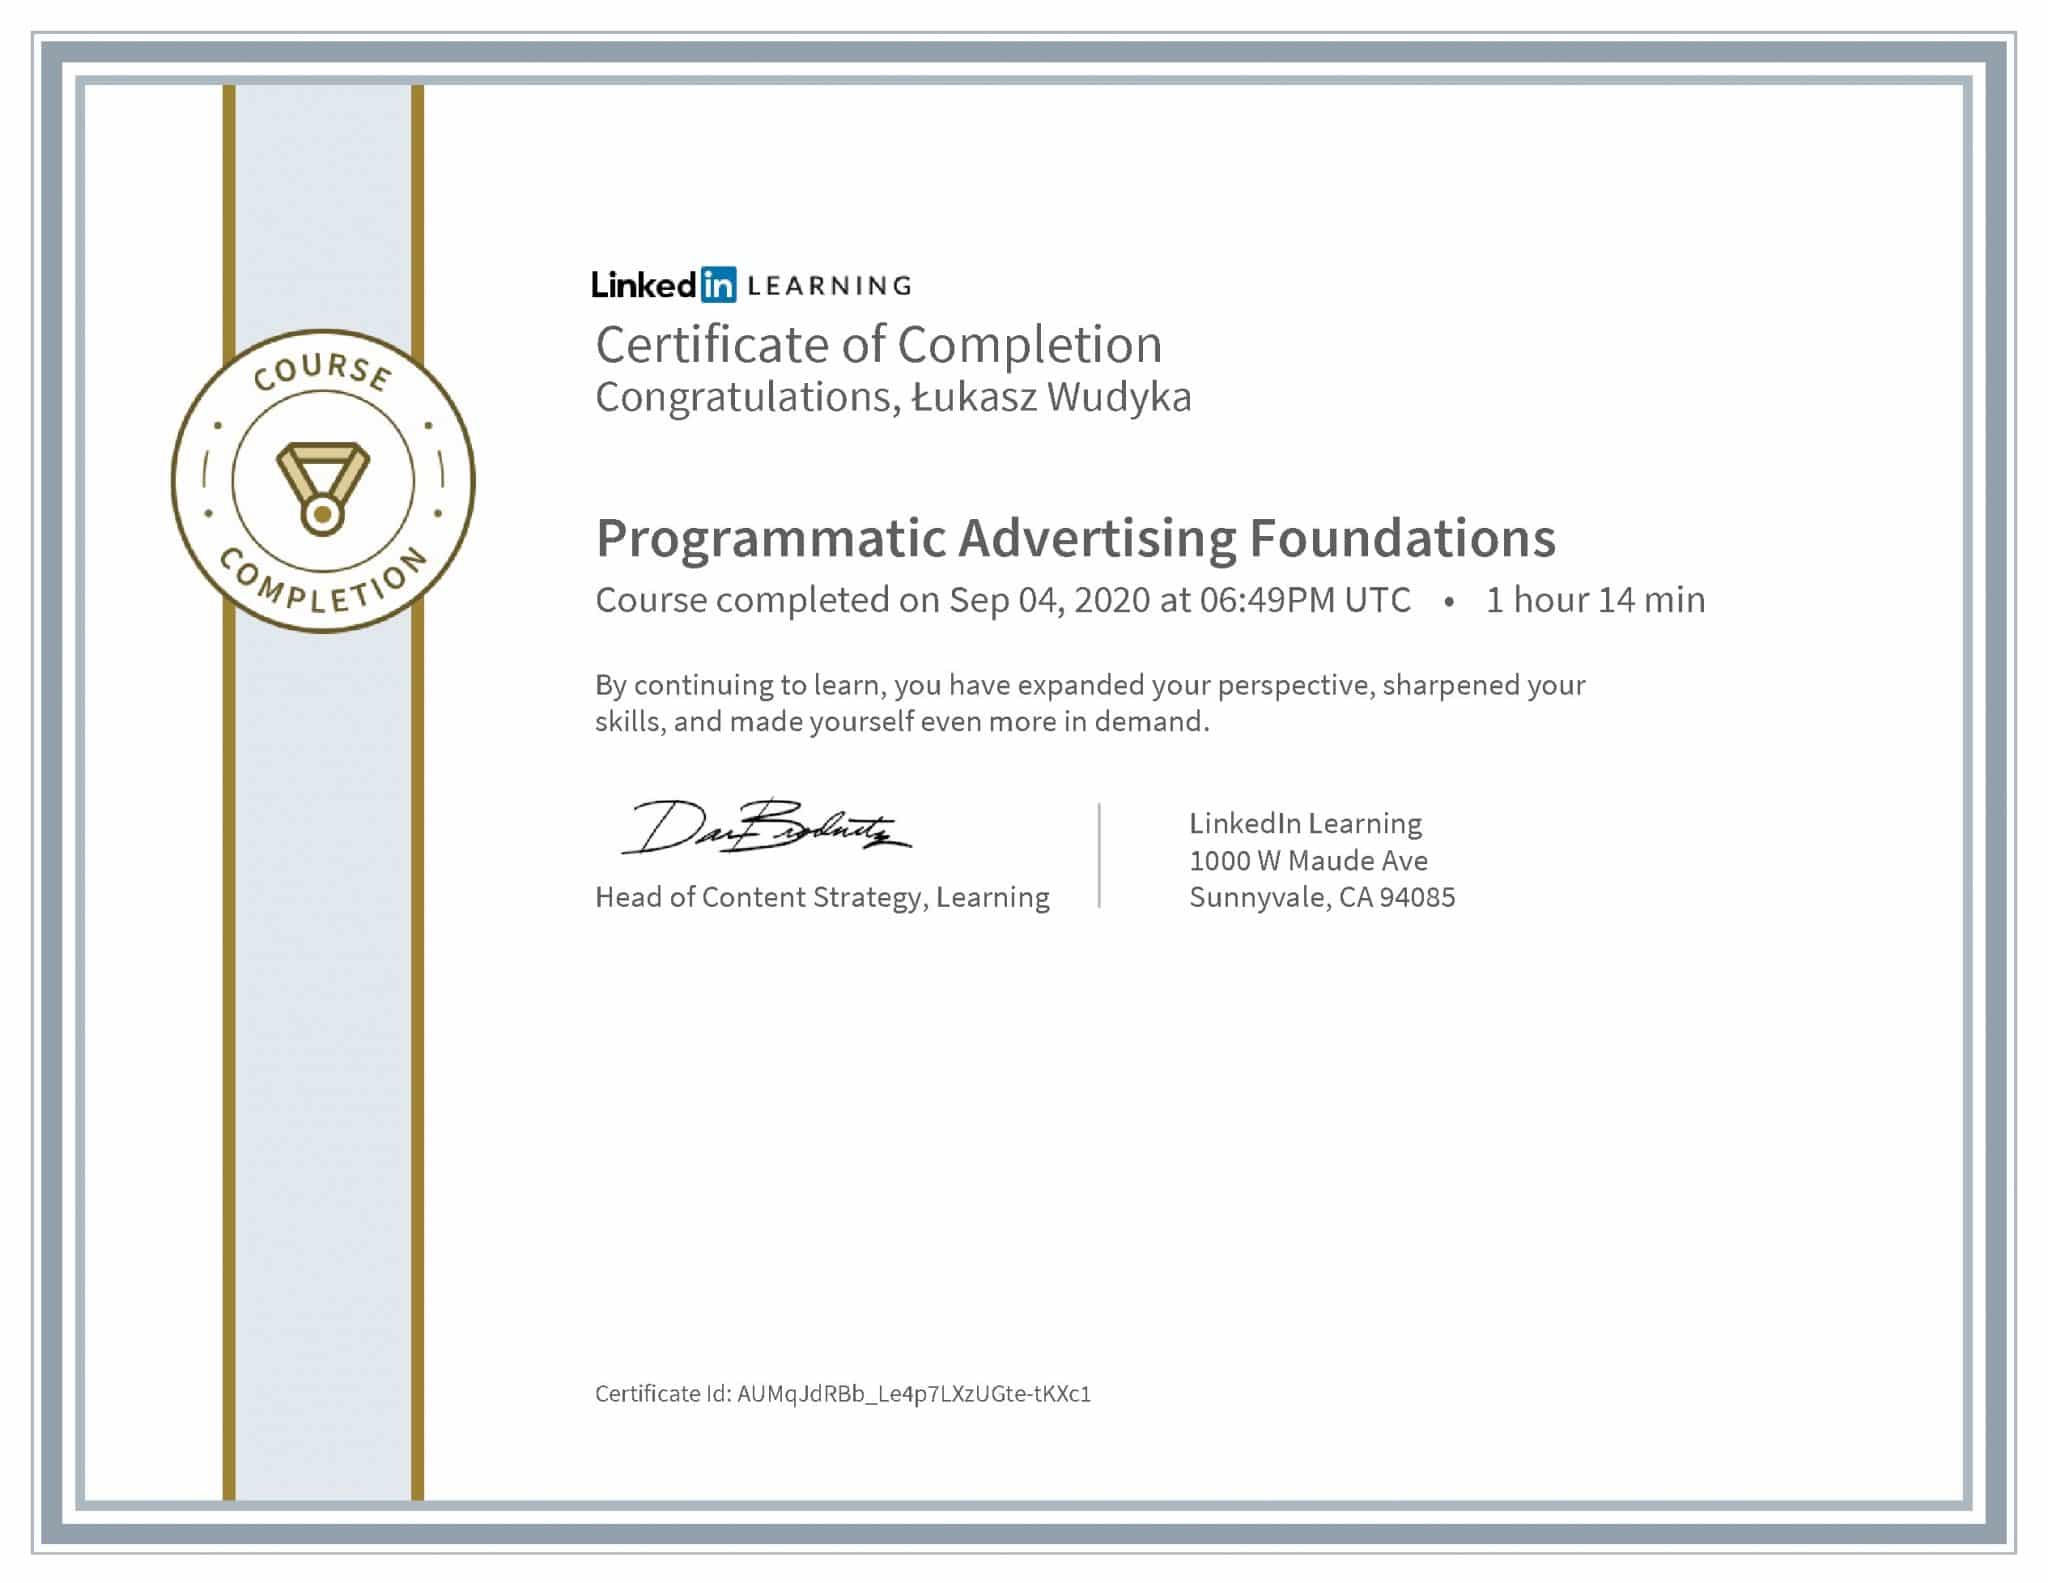 Łukasz Wudyka certyfikat LinkedIn Programmatic Advertising Foundations